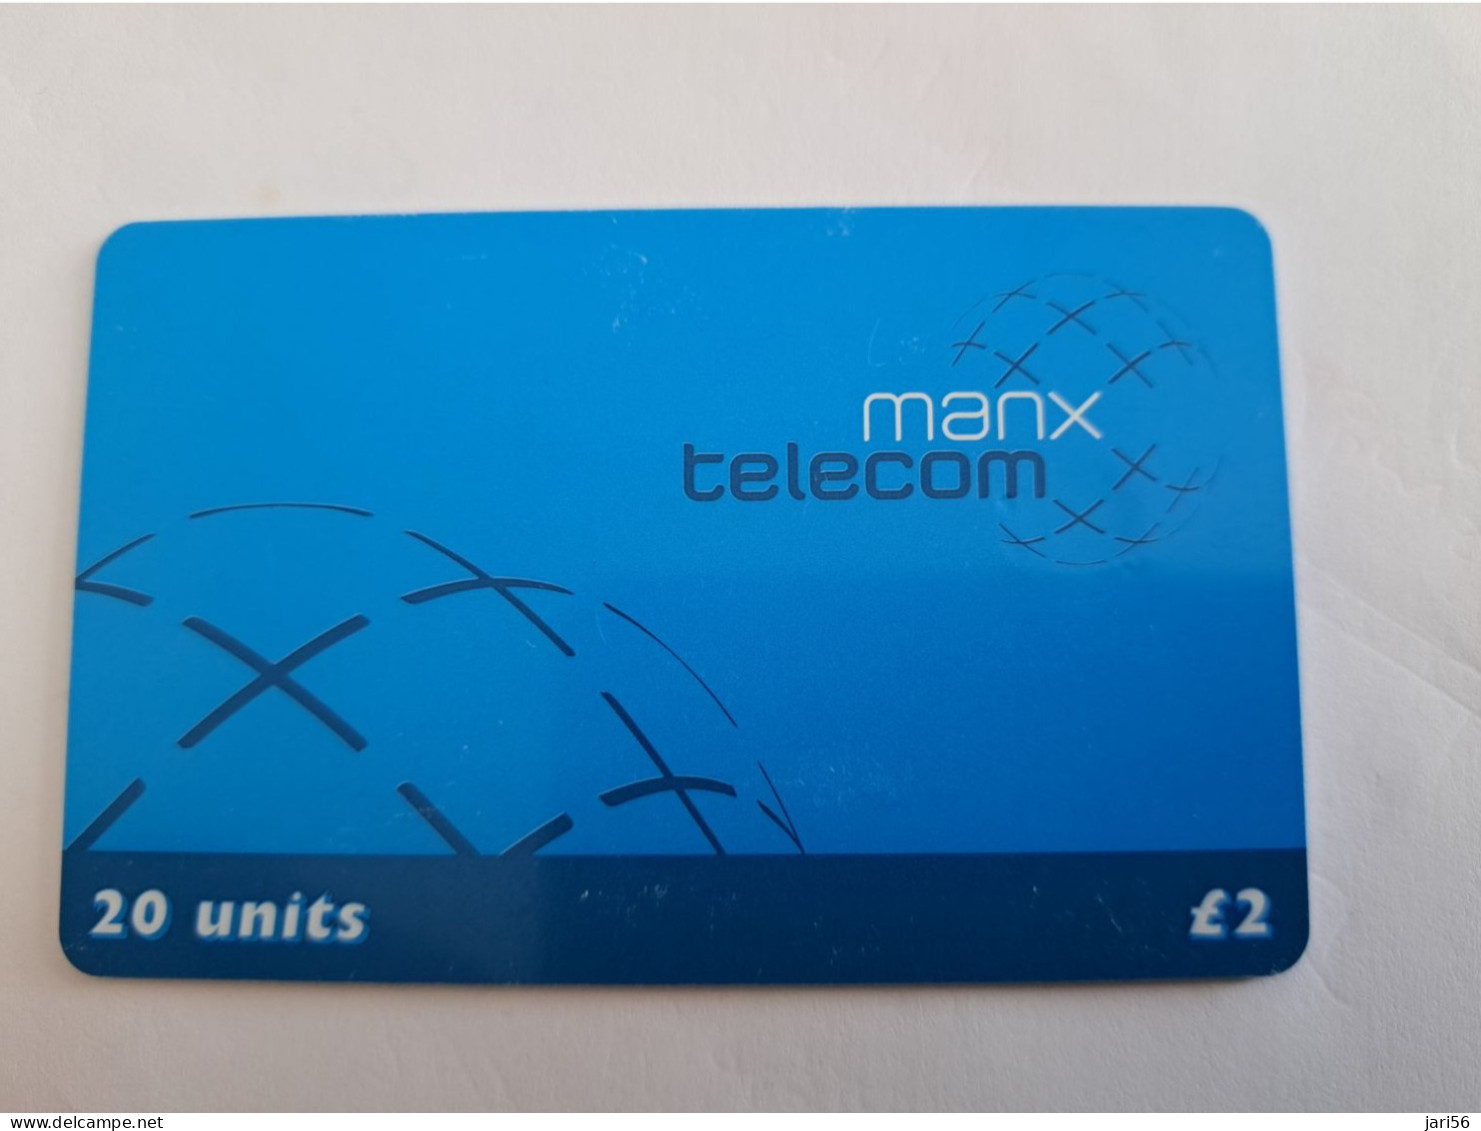 ISLE OF MAN 2 POUND  MANX TELECOM  21 UNITS / MANX TELECOM/ BLUE CARD            CHIP   ** 15104** - Man (Eiland)